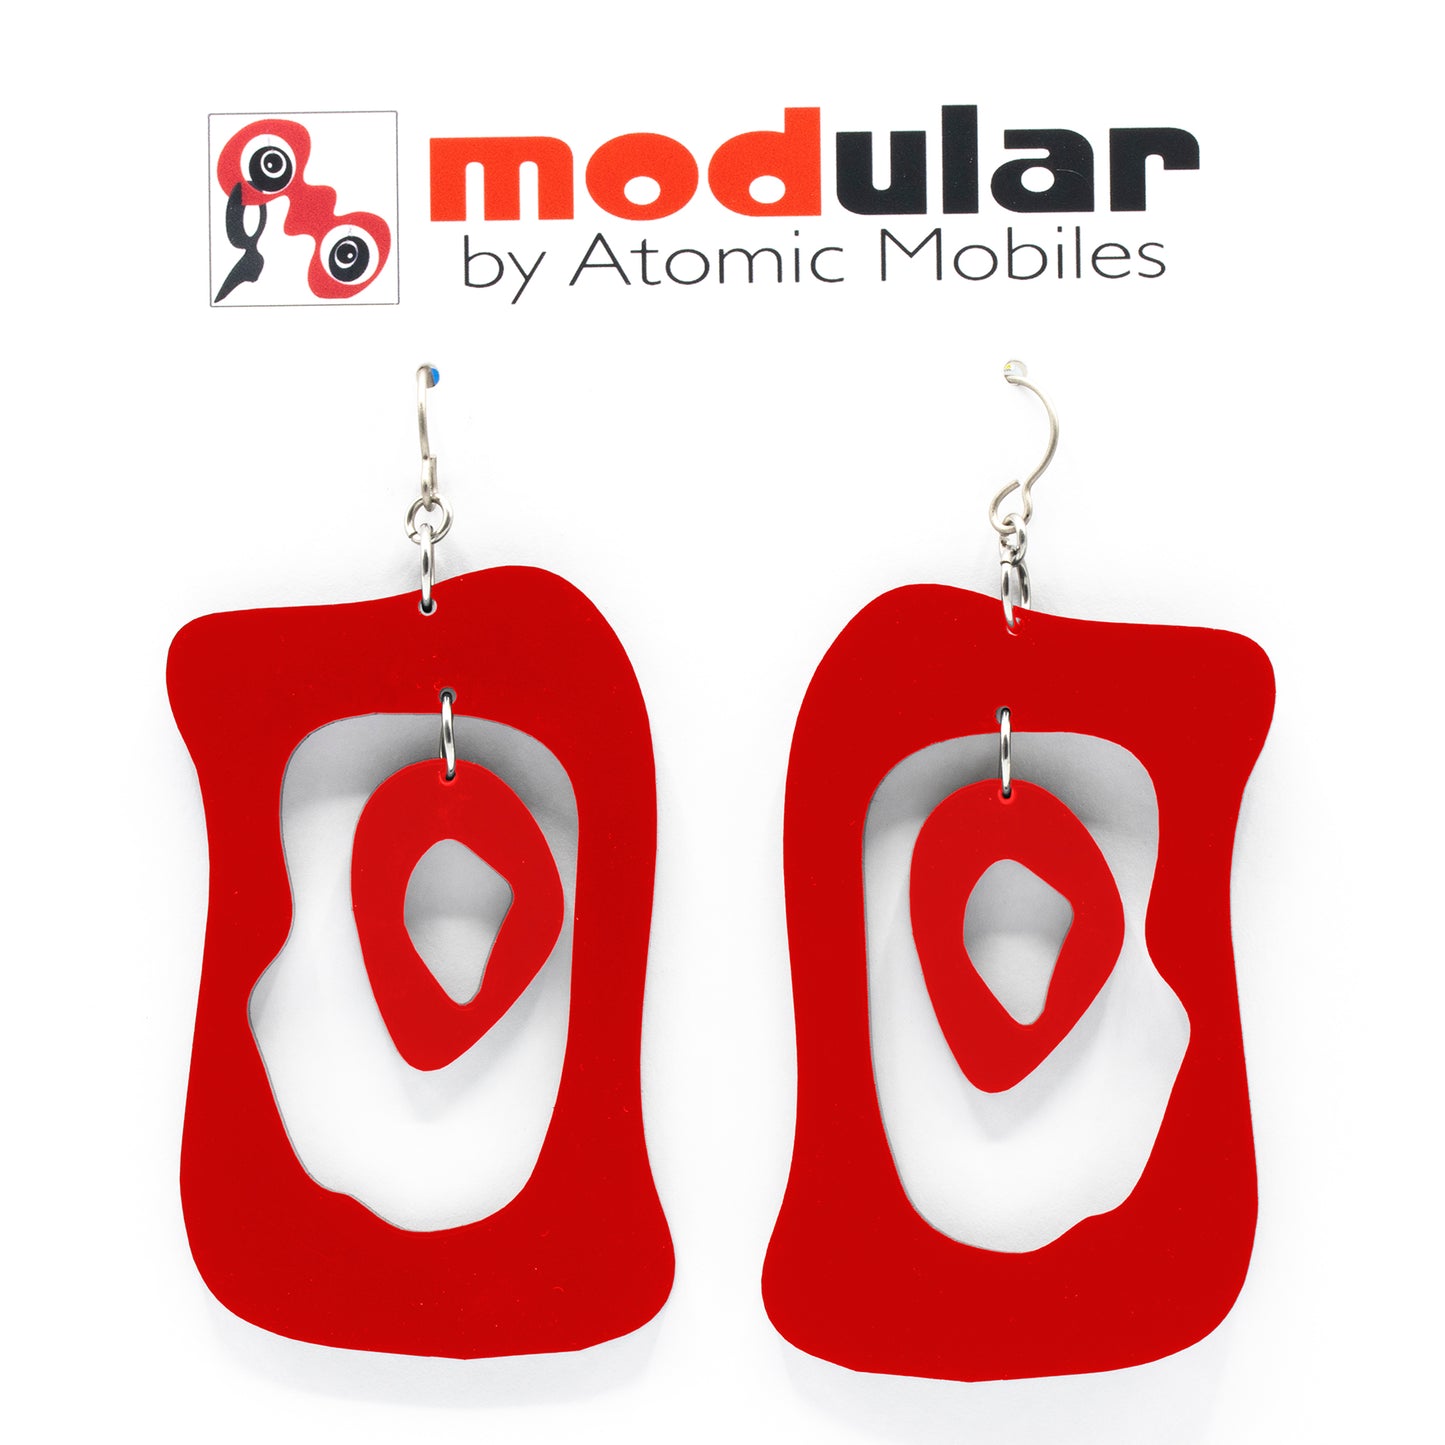 MODular Earrings - Modern Bliss Statement Earrings in Red by AtomicMobiles.com - retro era inspired mod handmade jewelry